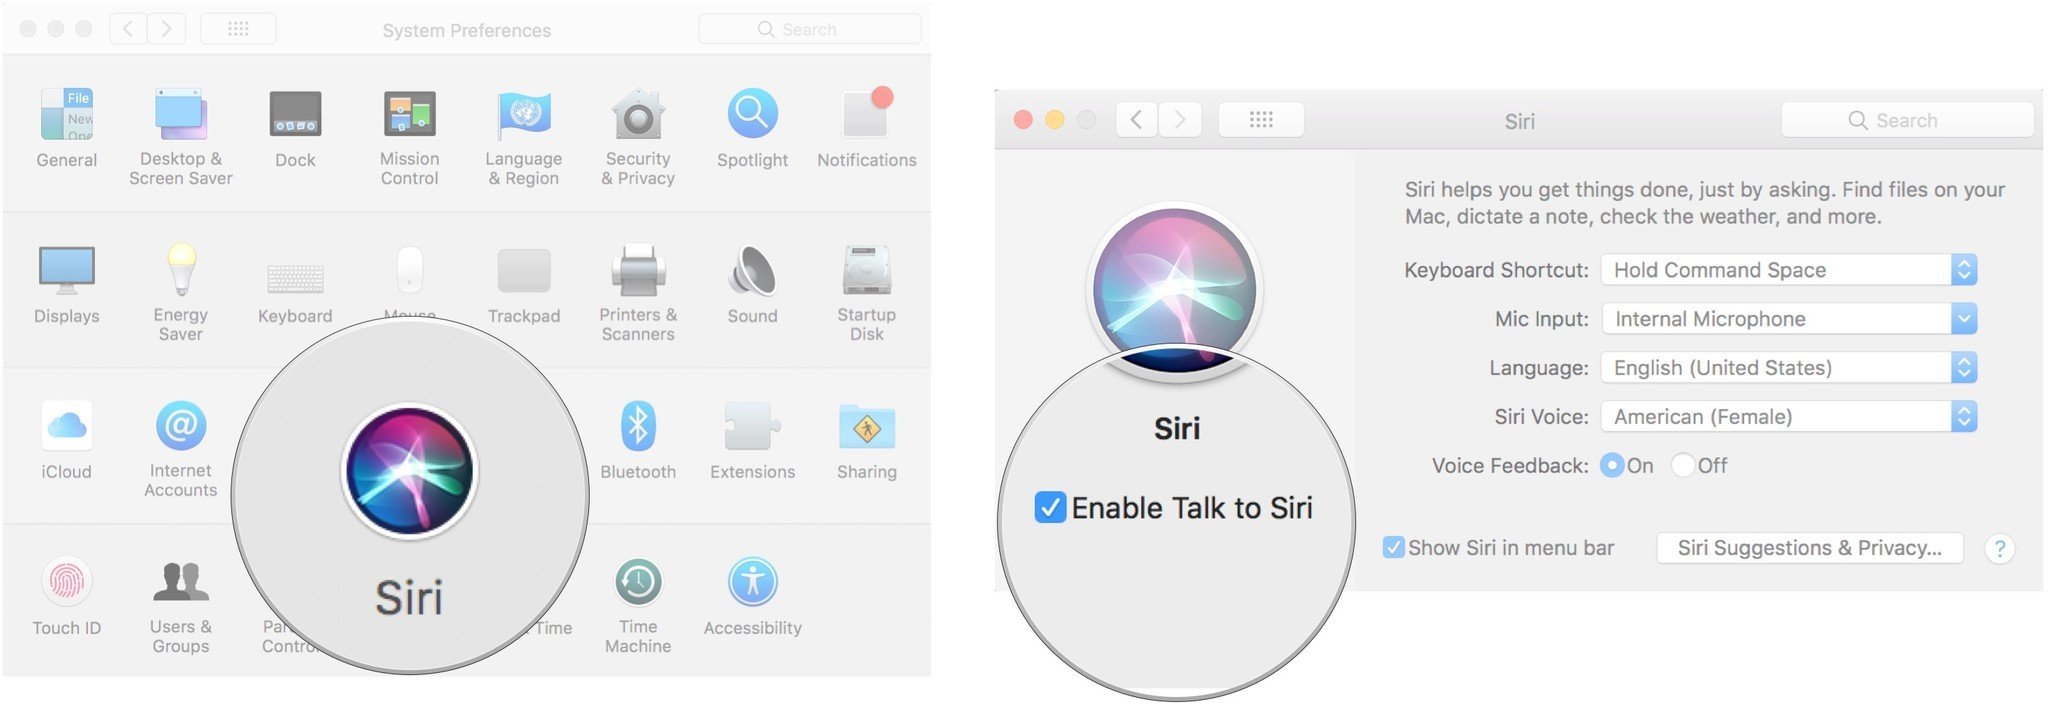 To enable Siri on the Mac, click on Siri, then enable Talk to Siri.